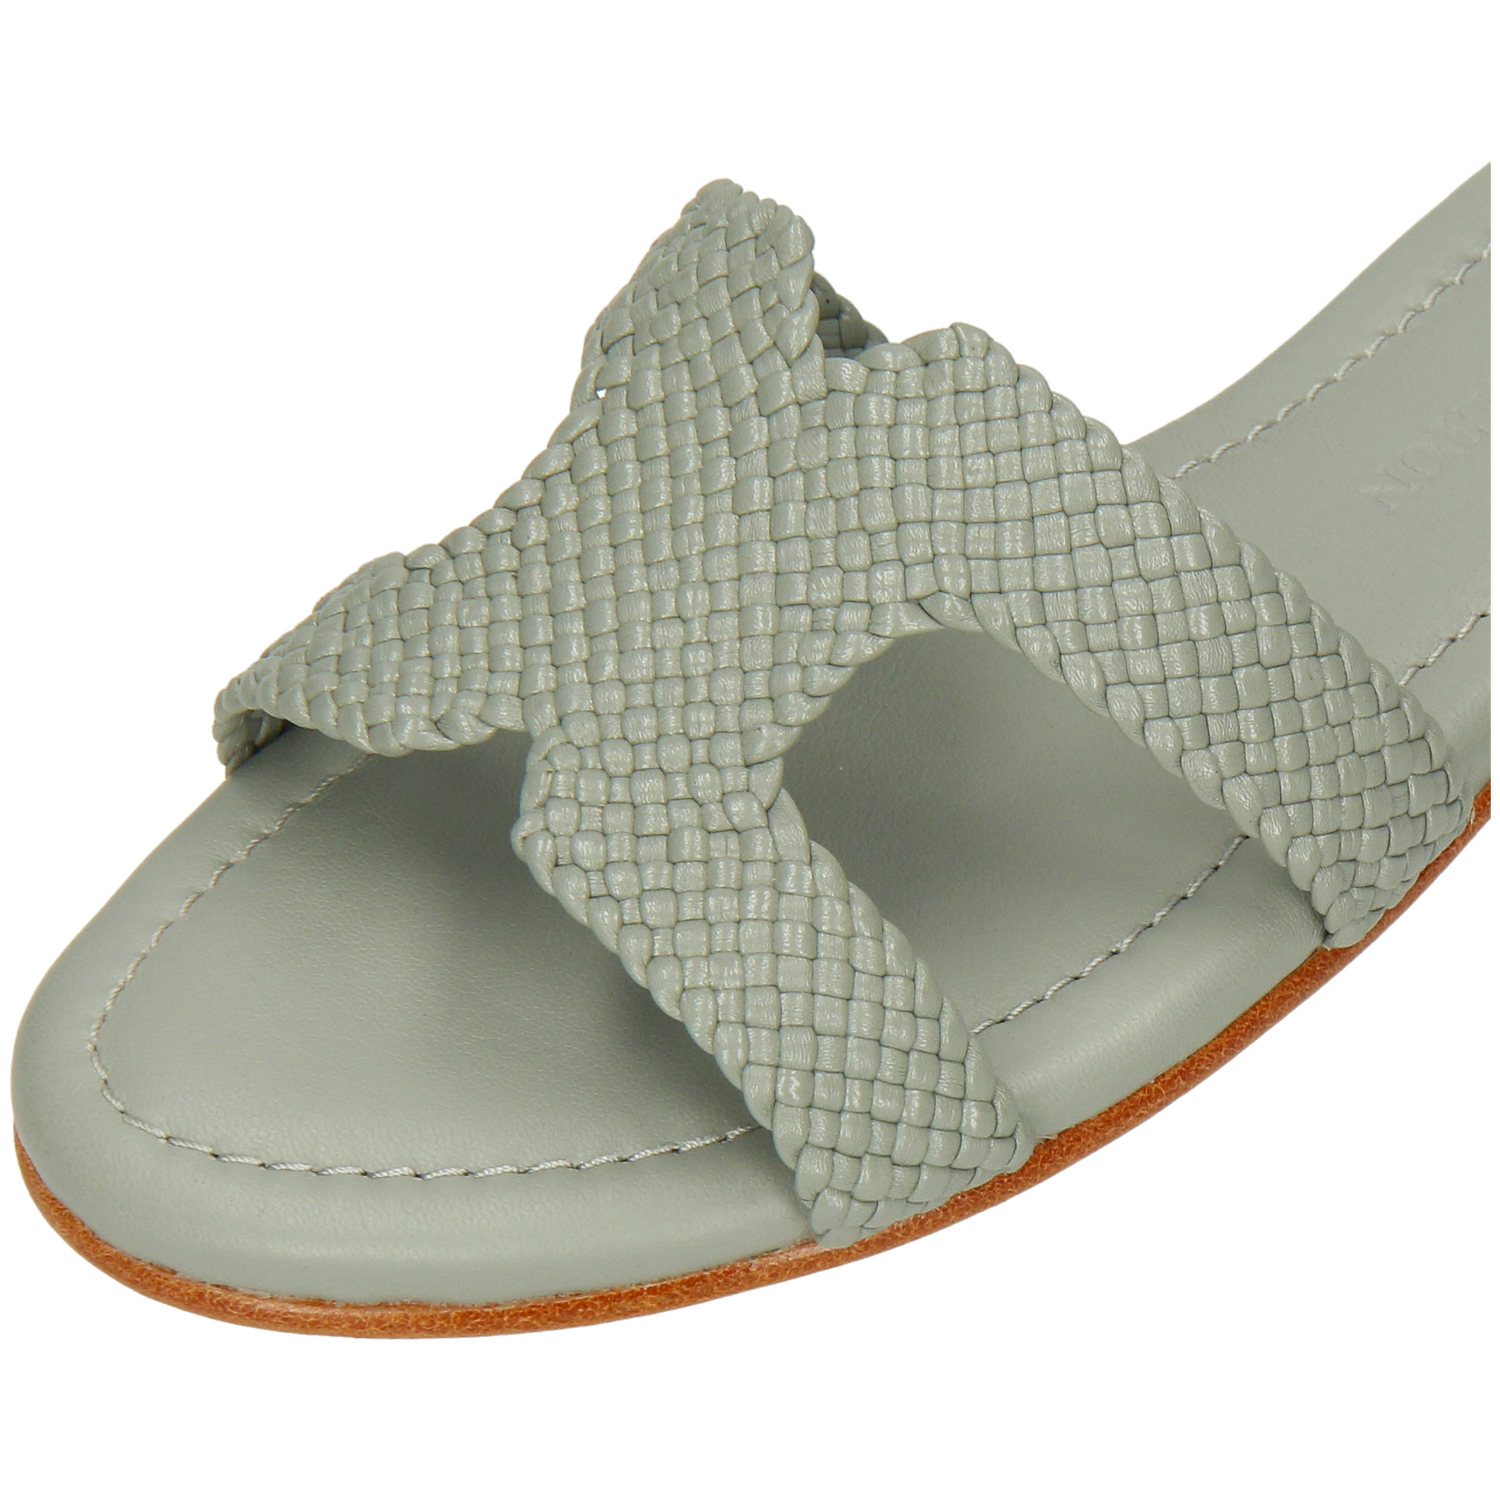 Hermes Oran Shoes Sandals Lizard Ombre Size 40 NEW